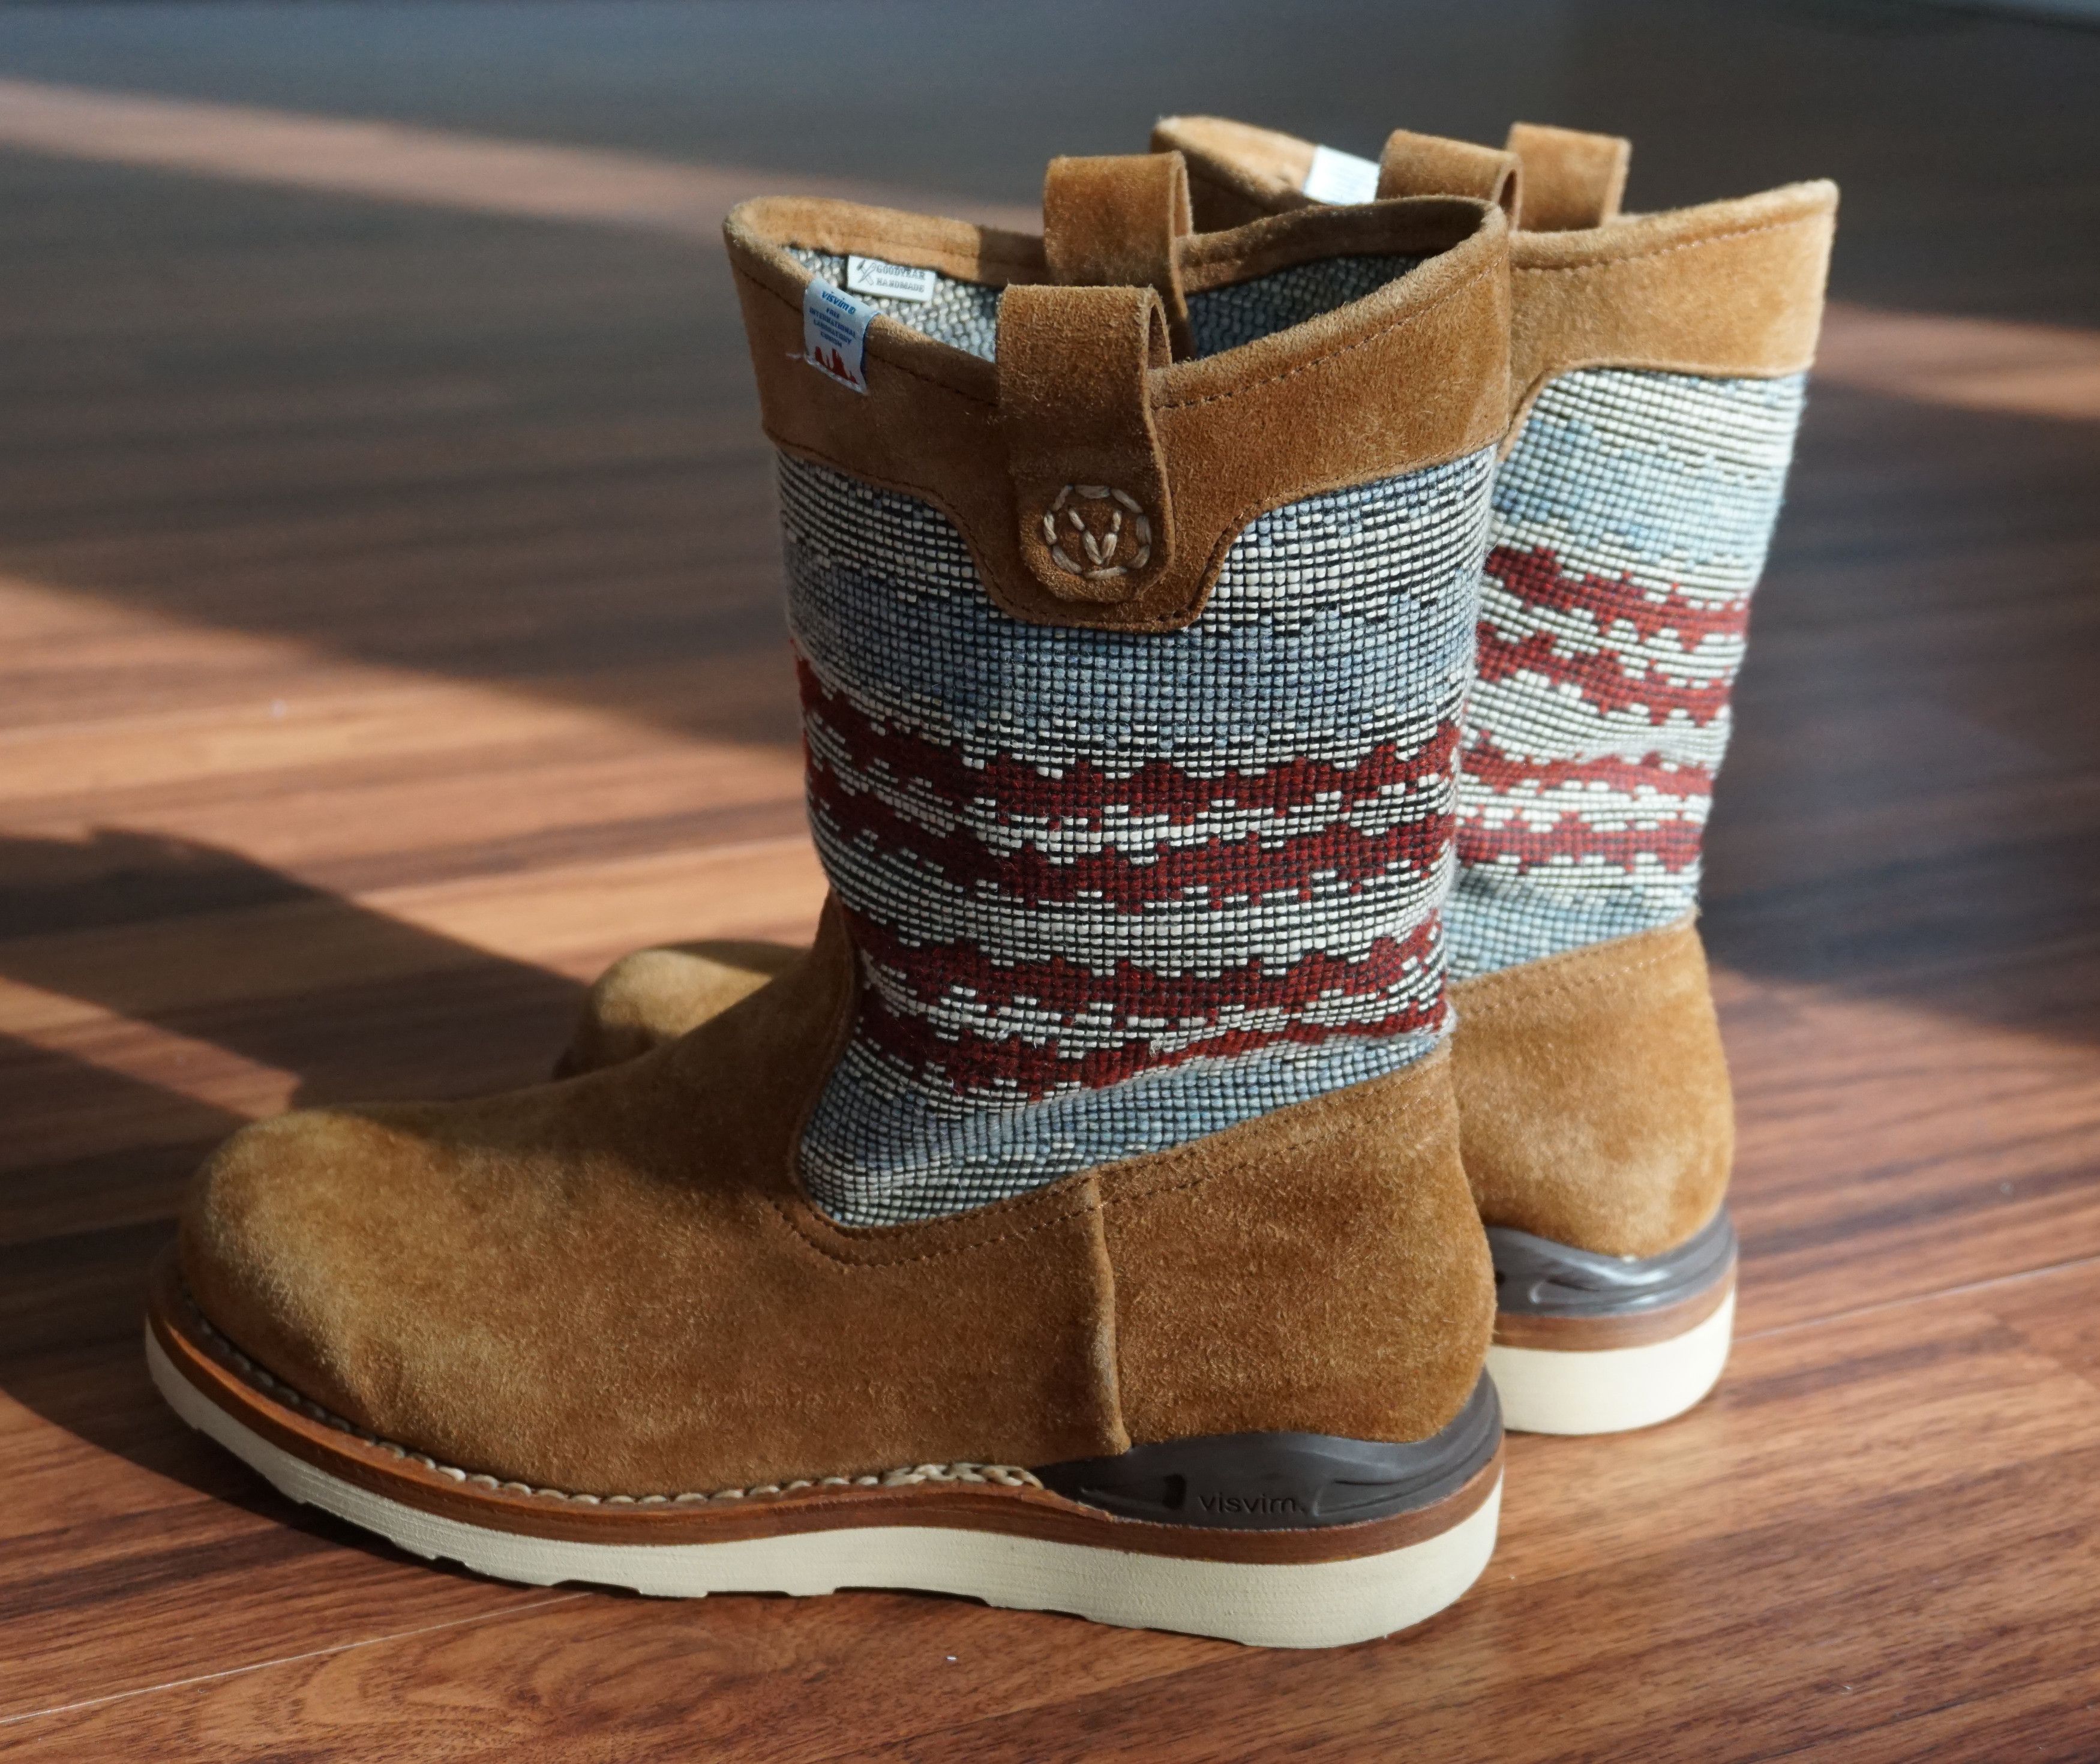 Visvim Wabanaki Blanket Folk Boots - FW11 | Grailed